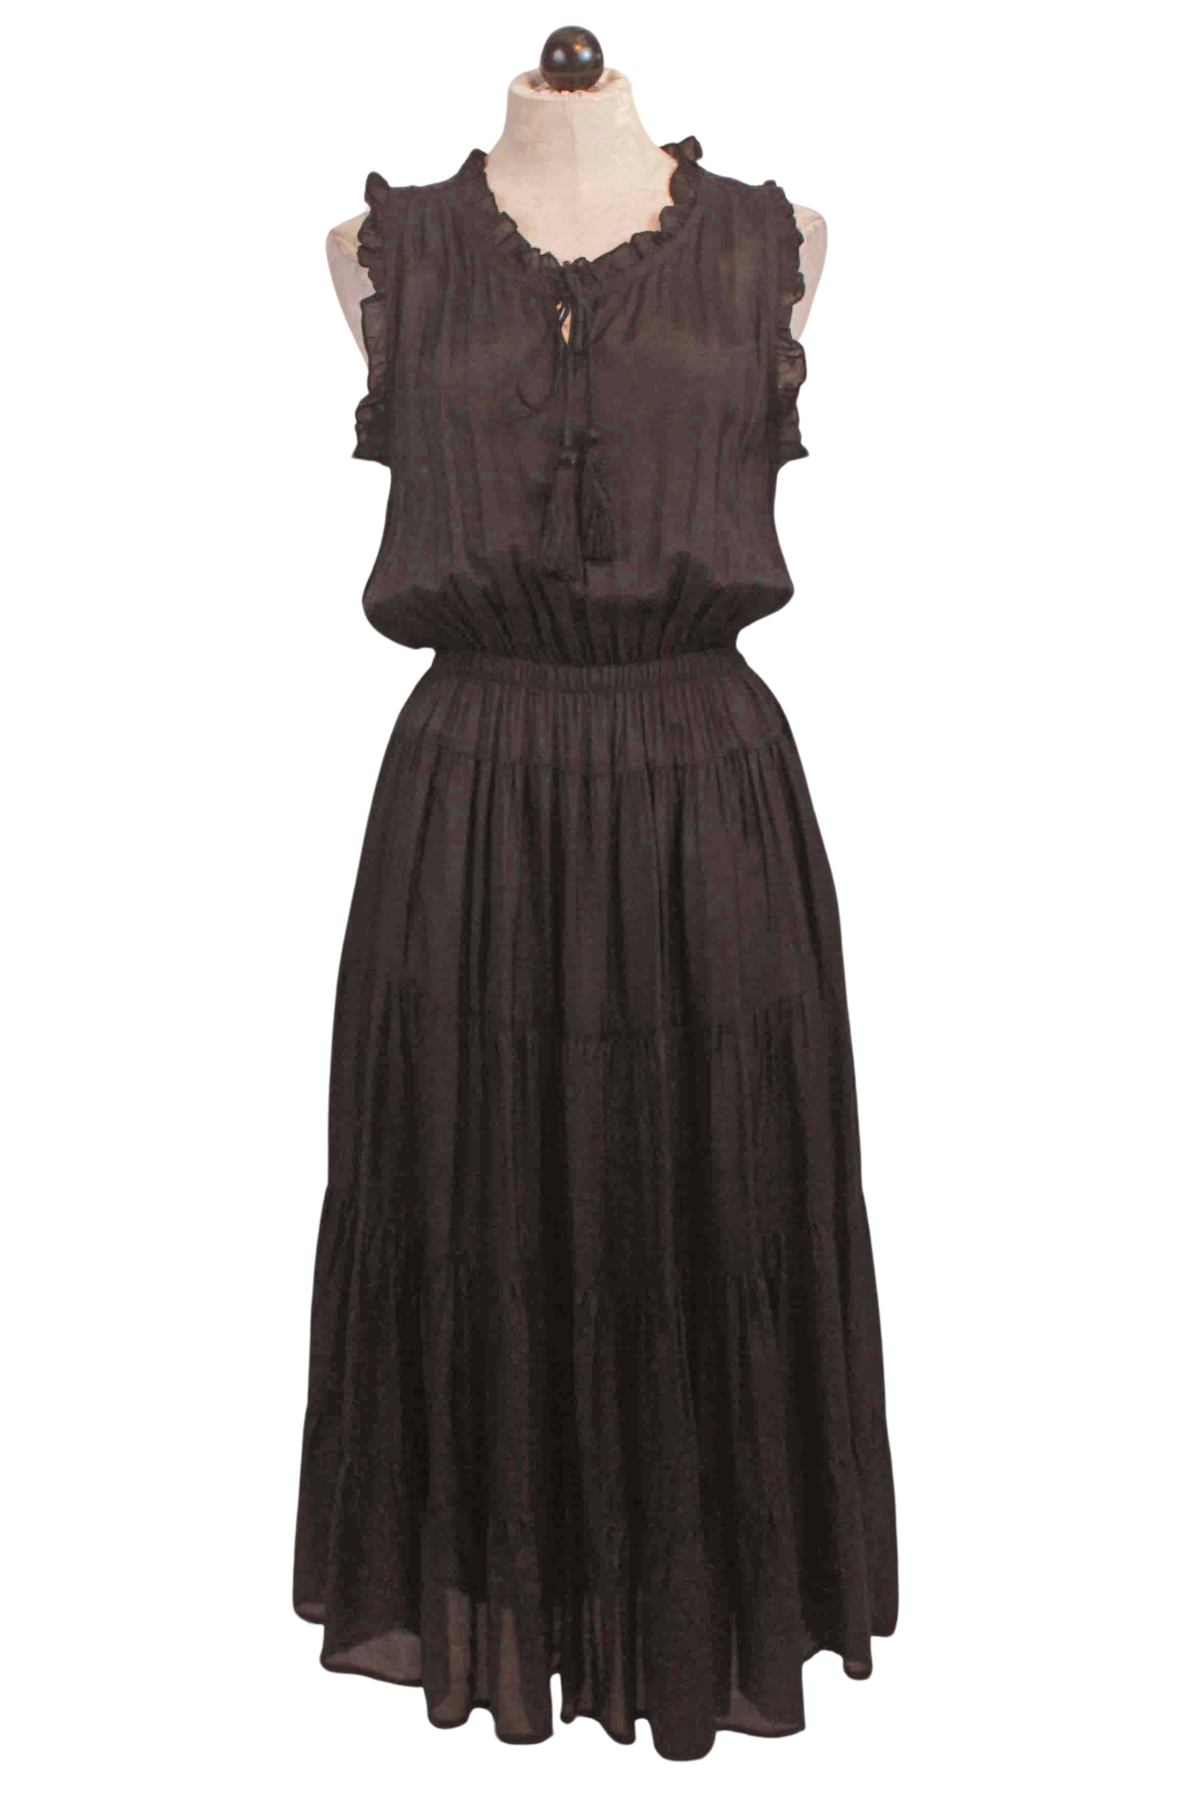 Black Sleeveless Tiered Sophia Dress by Naudic 